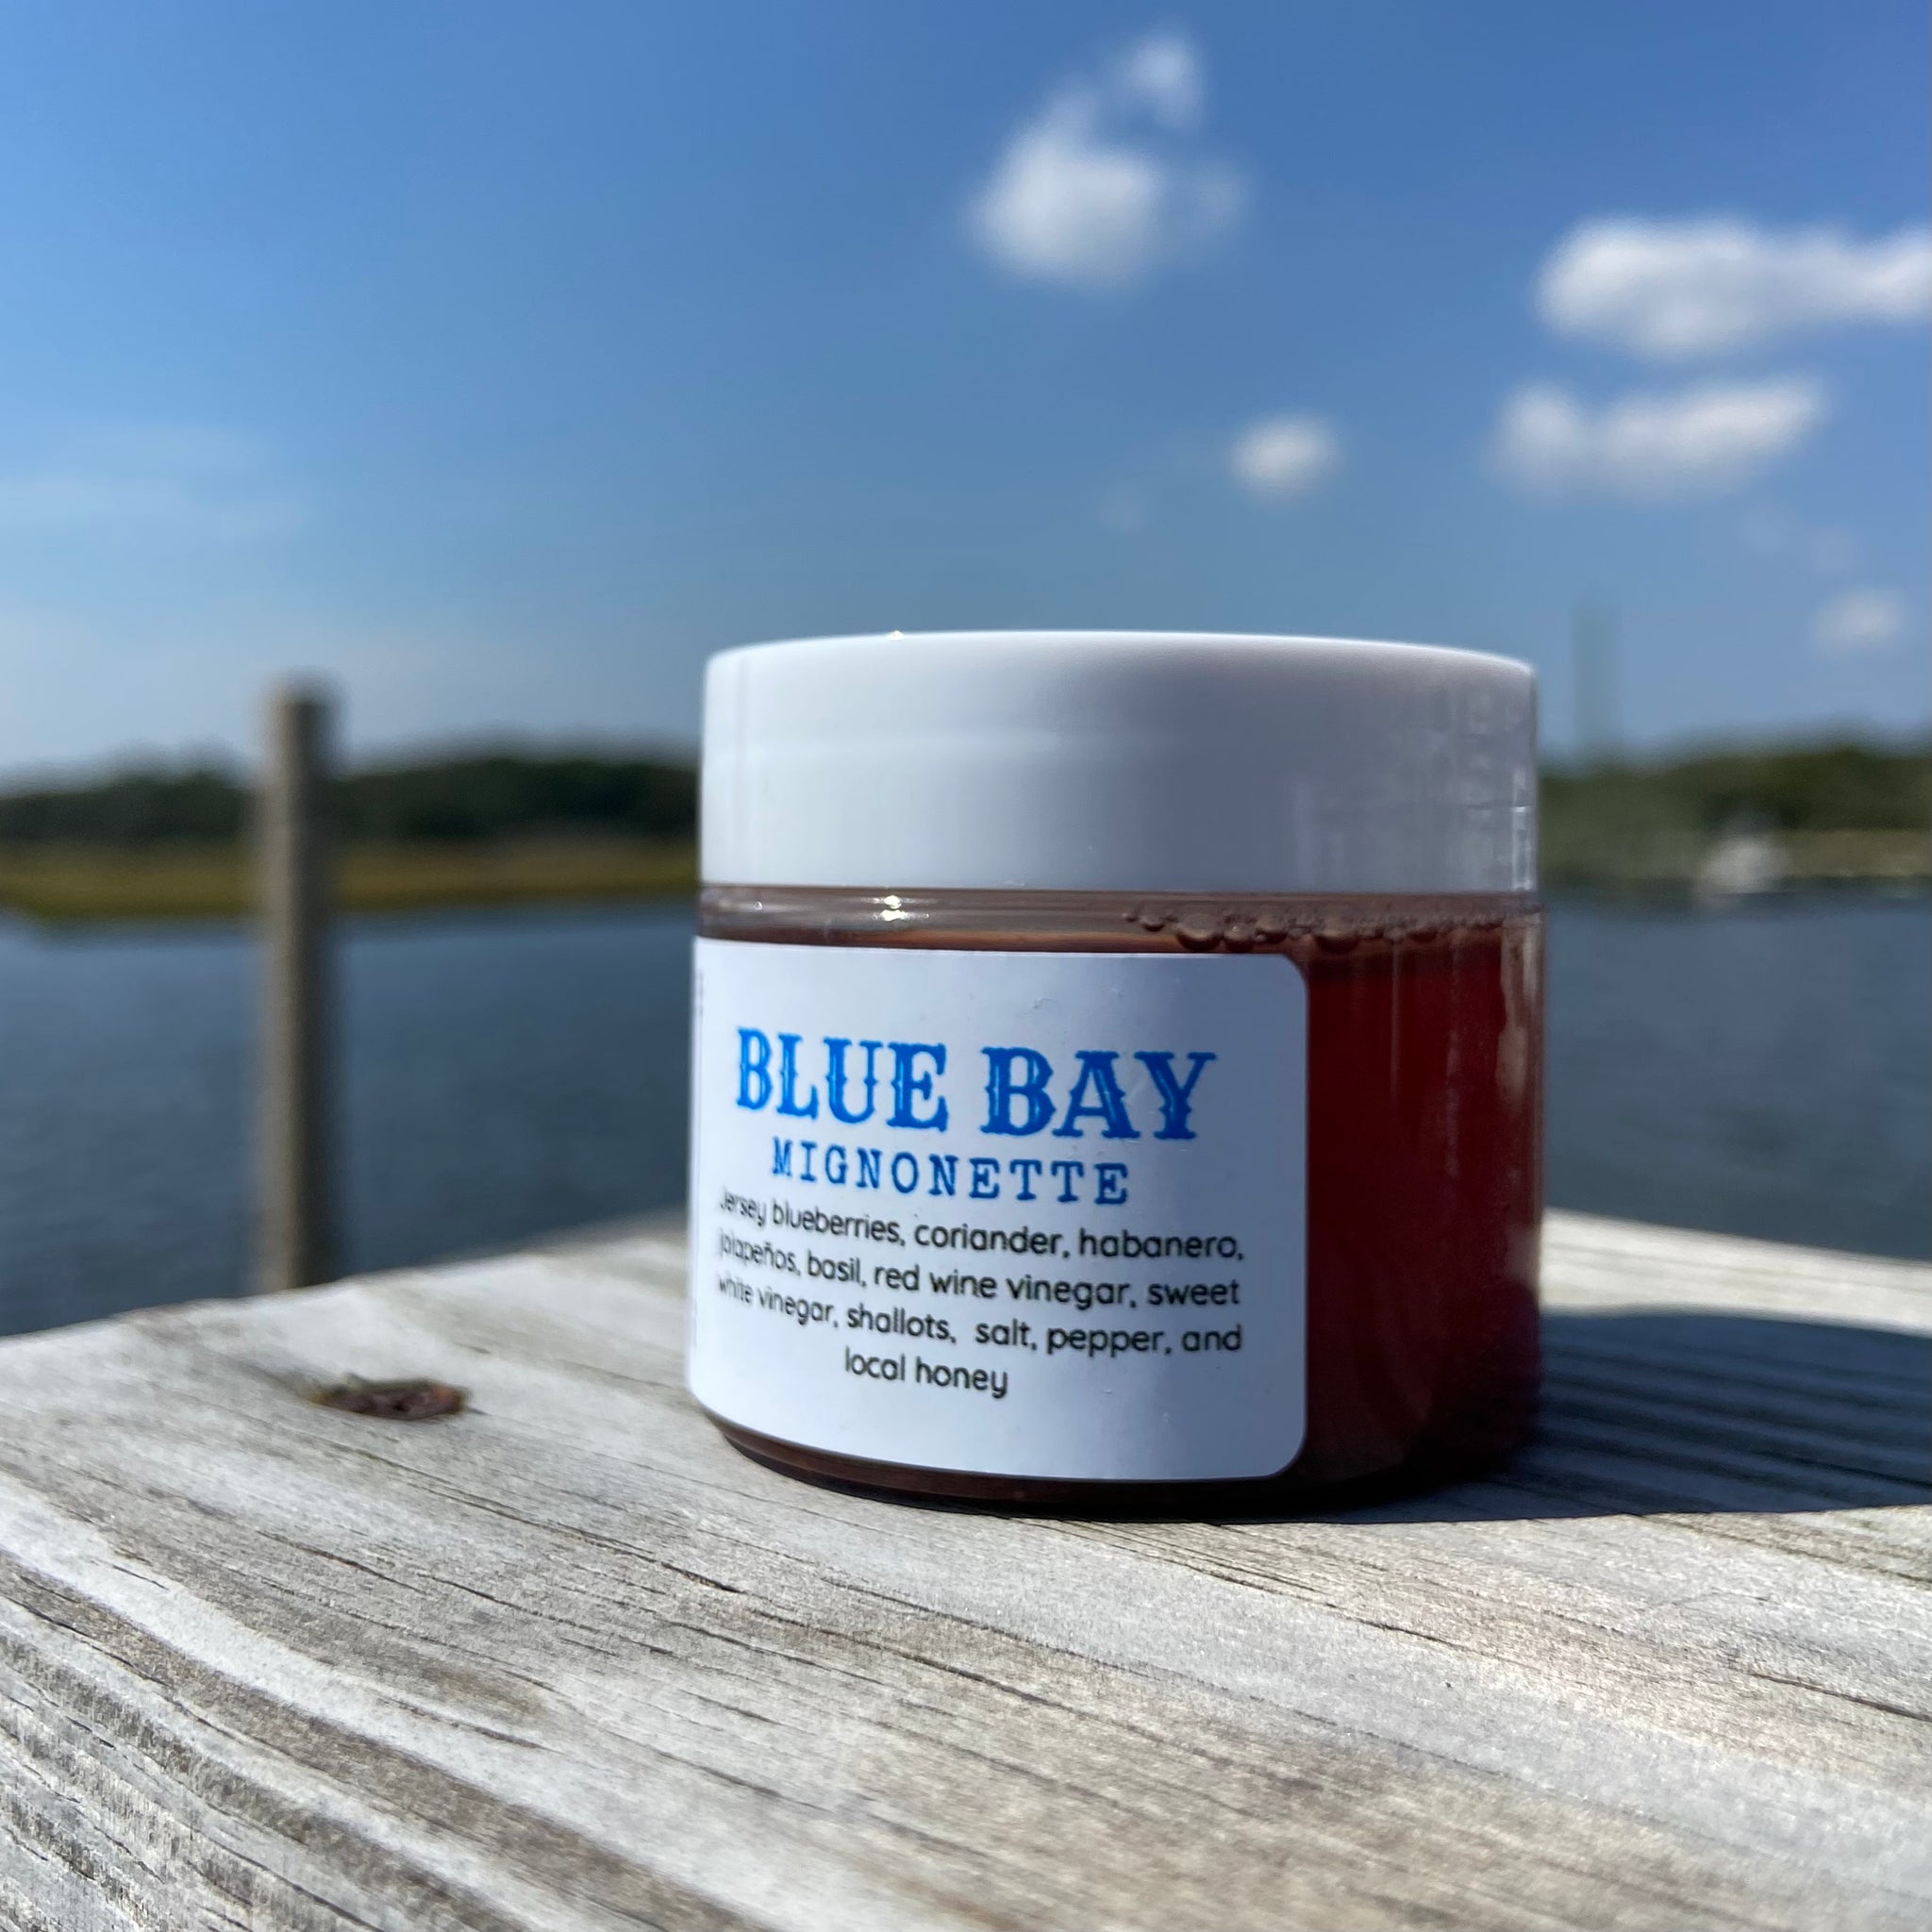 Blue Bay Mignonette